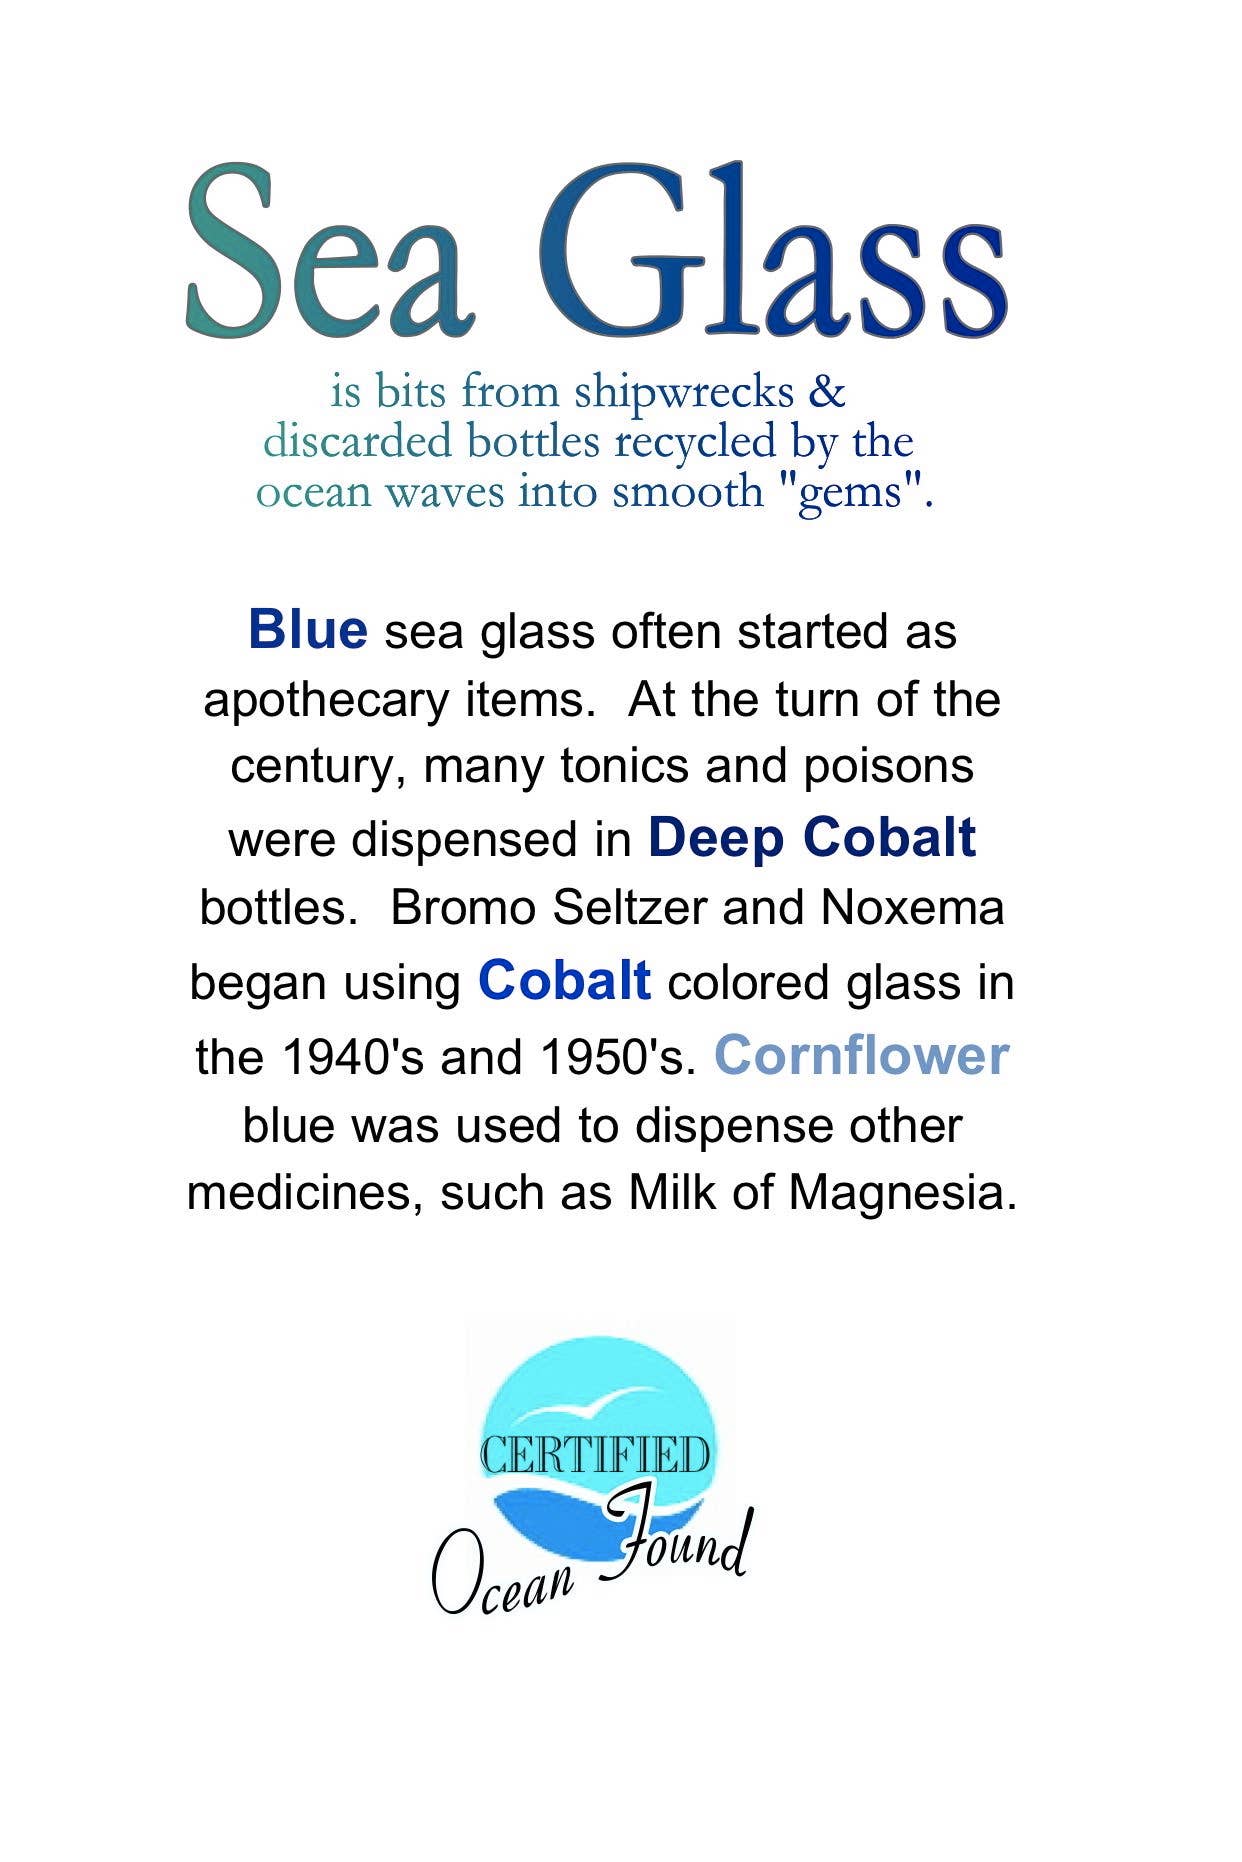 Sea Glass Certified Ocean Found